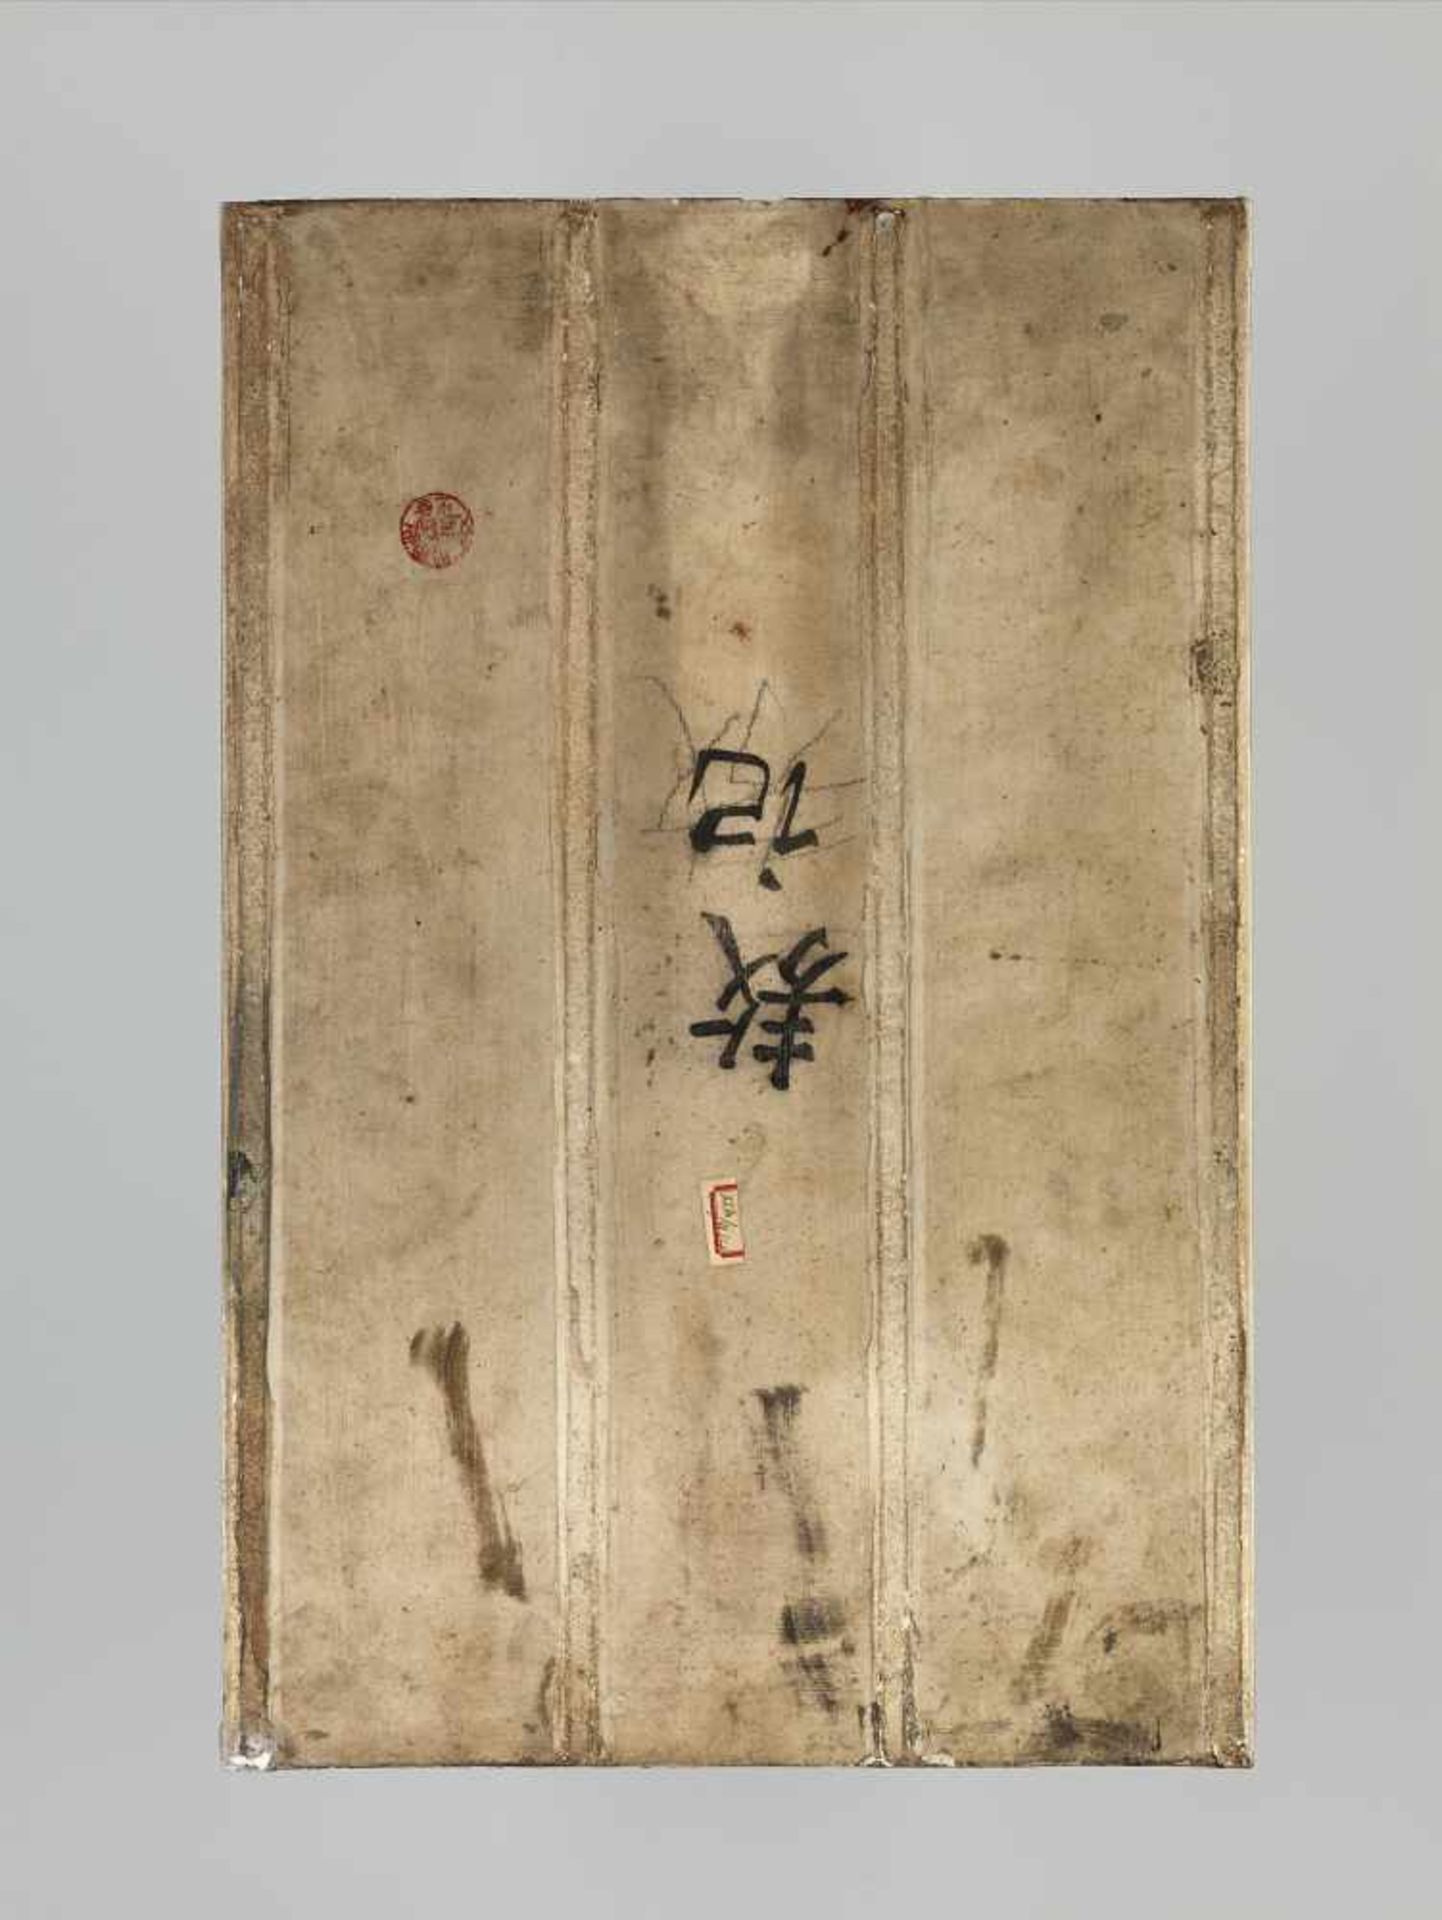 A PORCELAIN PLAQUE BY WANG QI, 1932China, signed Taomi sanren Wang Qi and dated 1932. Seal Tao Zhai. - Image 6 of 8